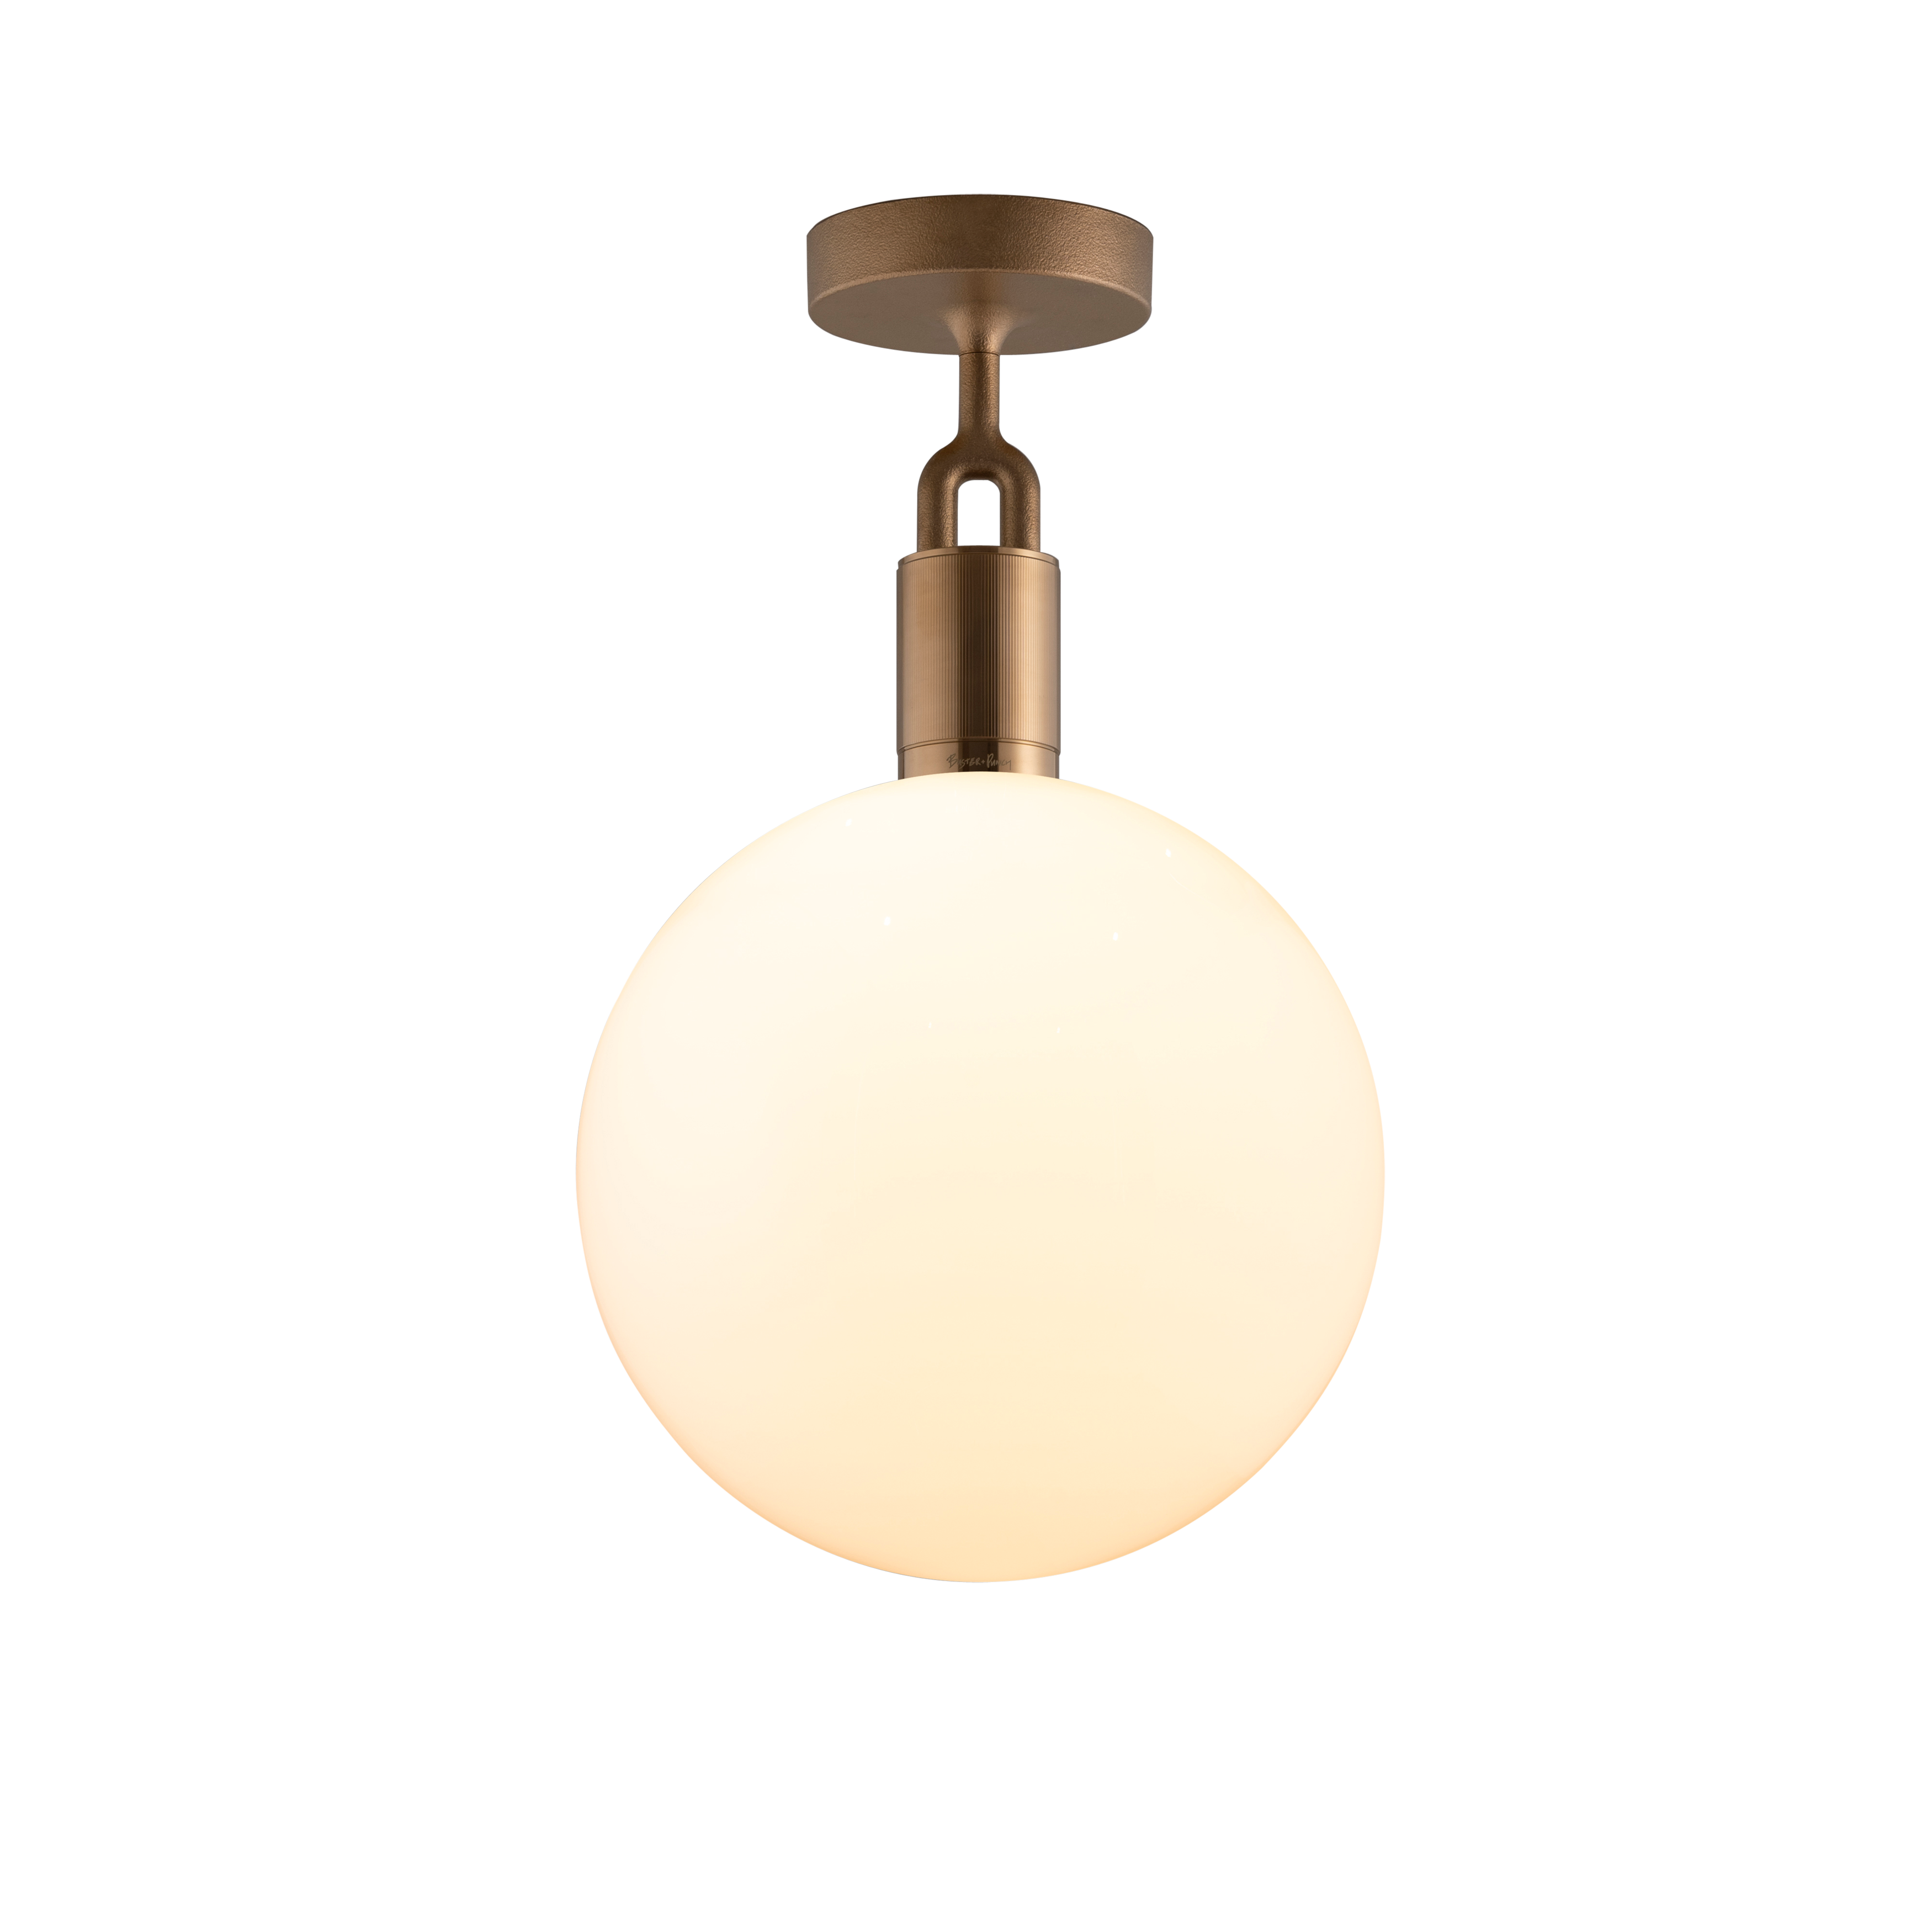 Loftlampe med rund skærm i opalglas og fatning i messing, på hvid baggrund